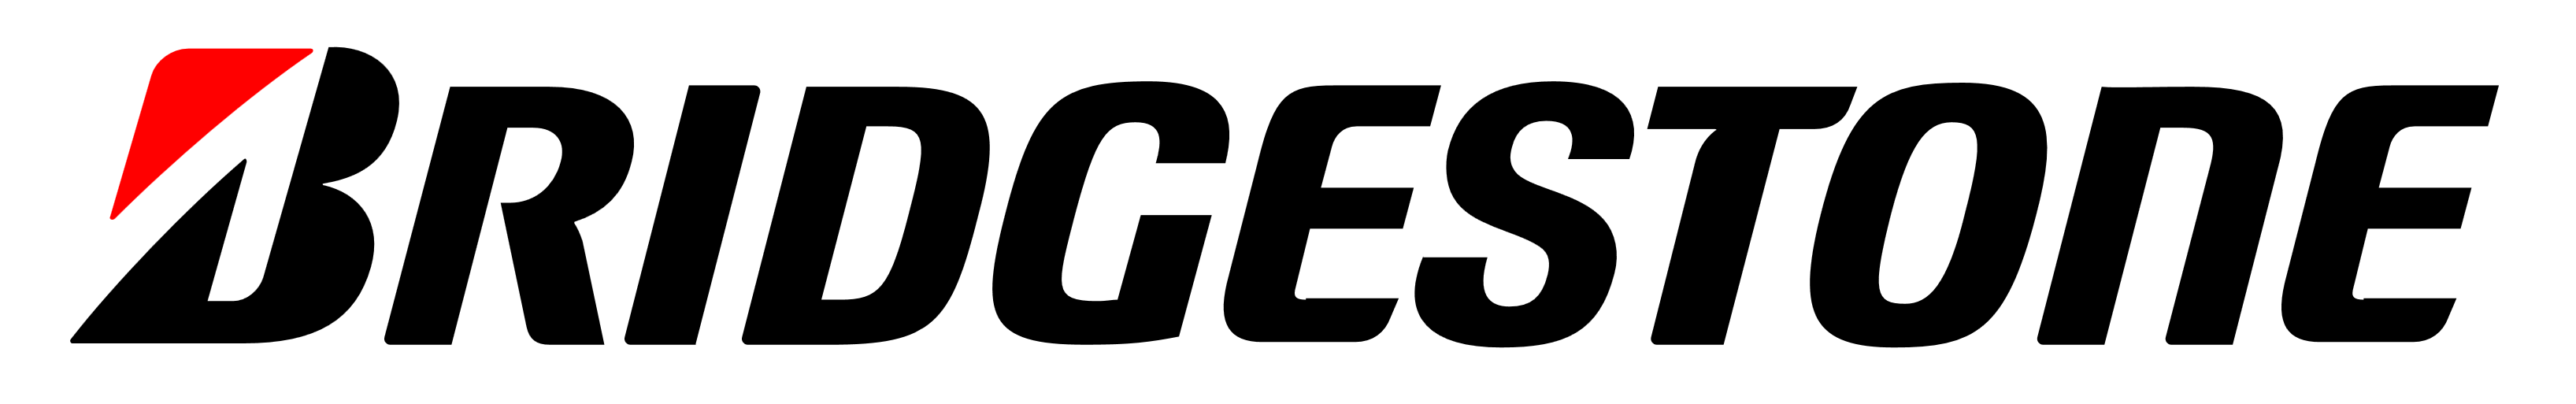 Bridgestone logo, logotype